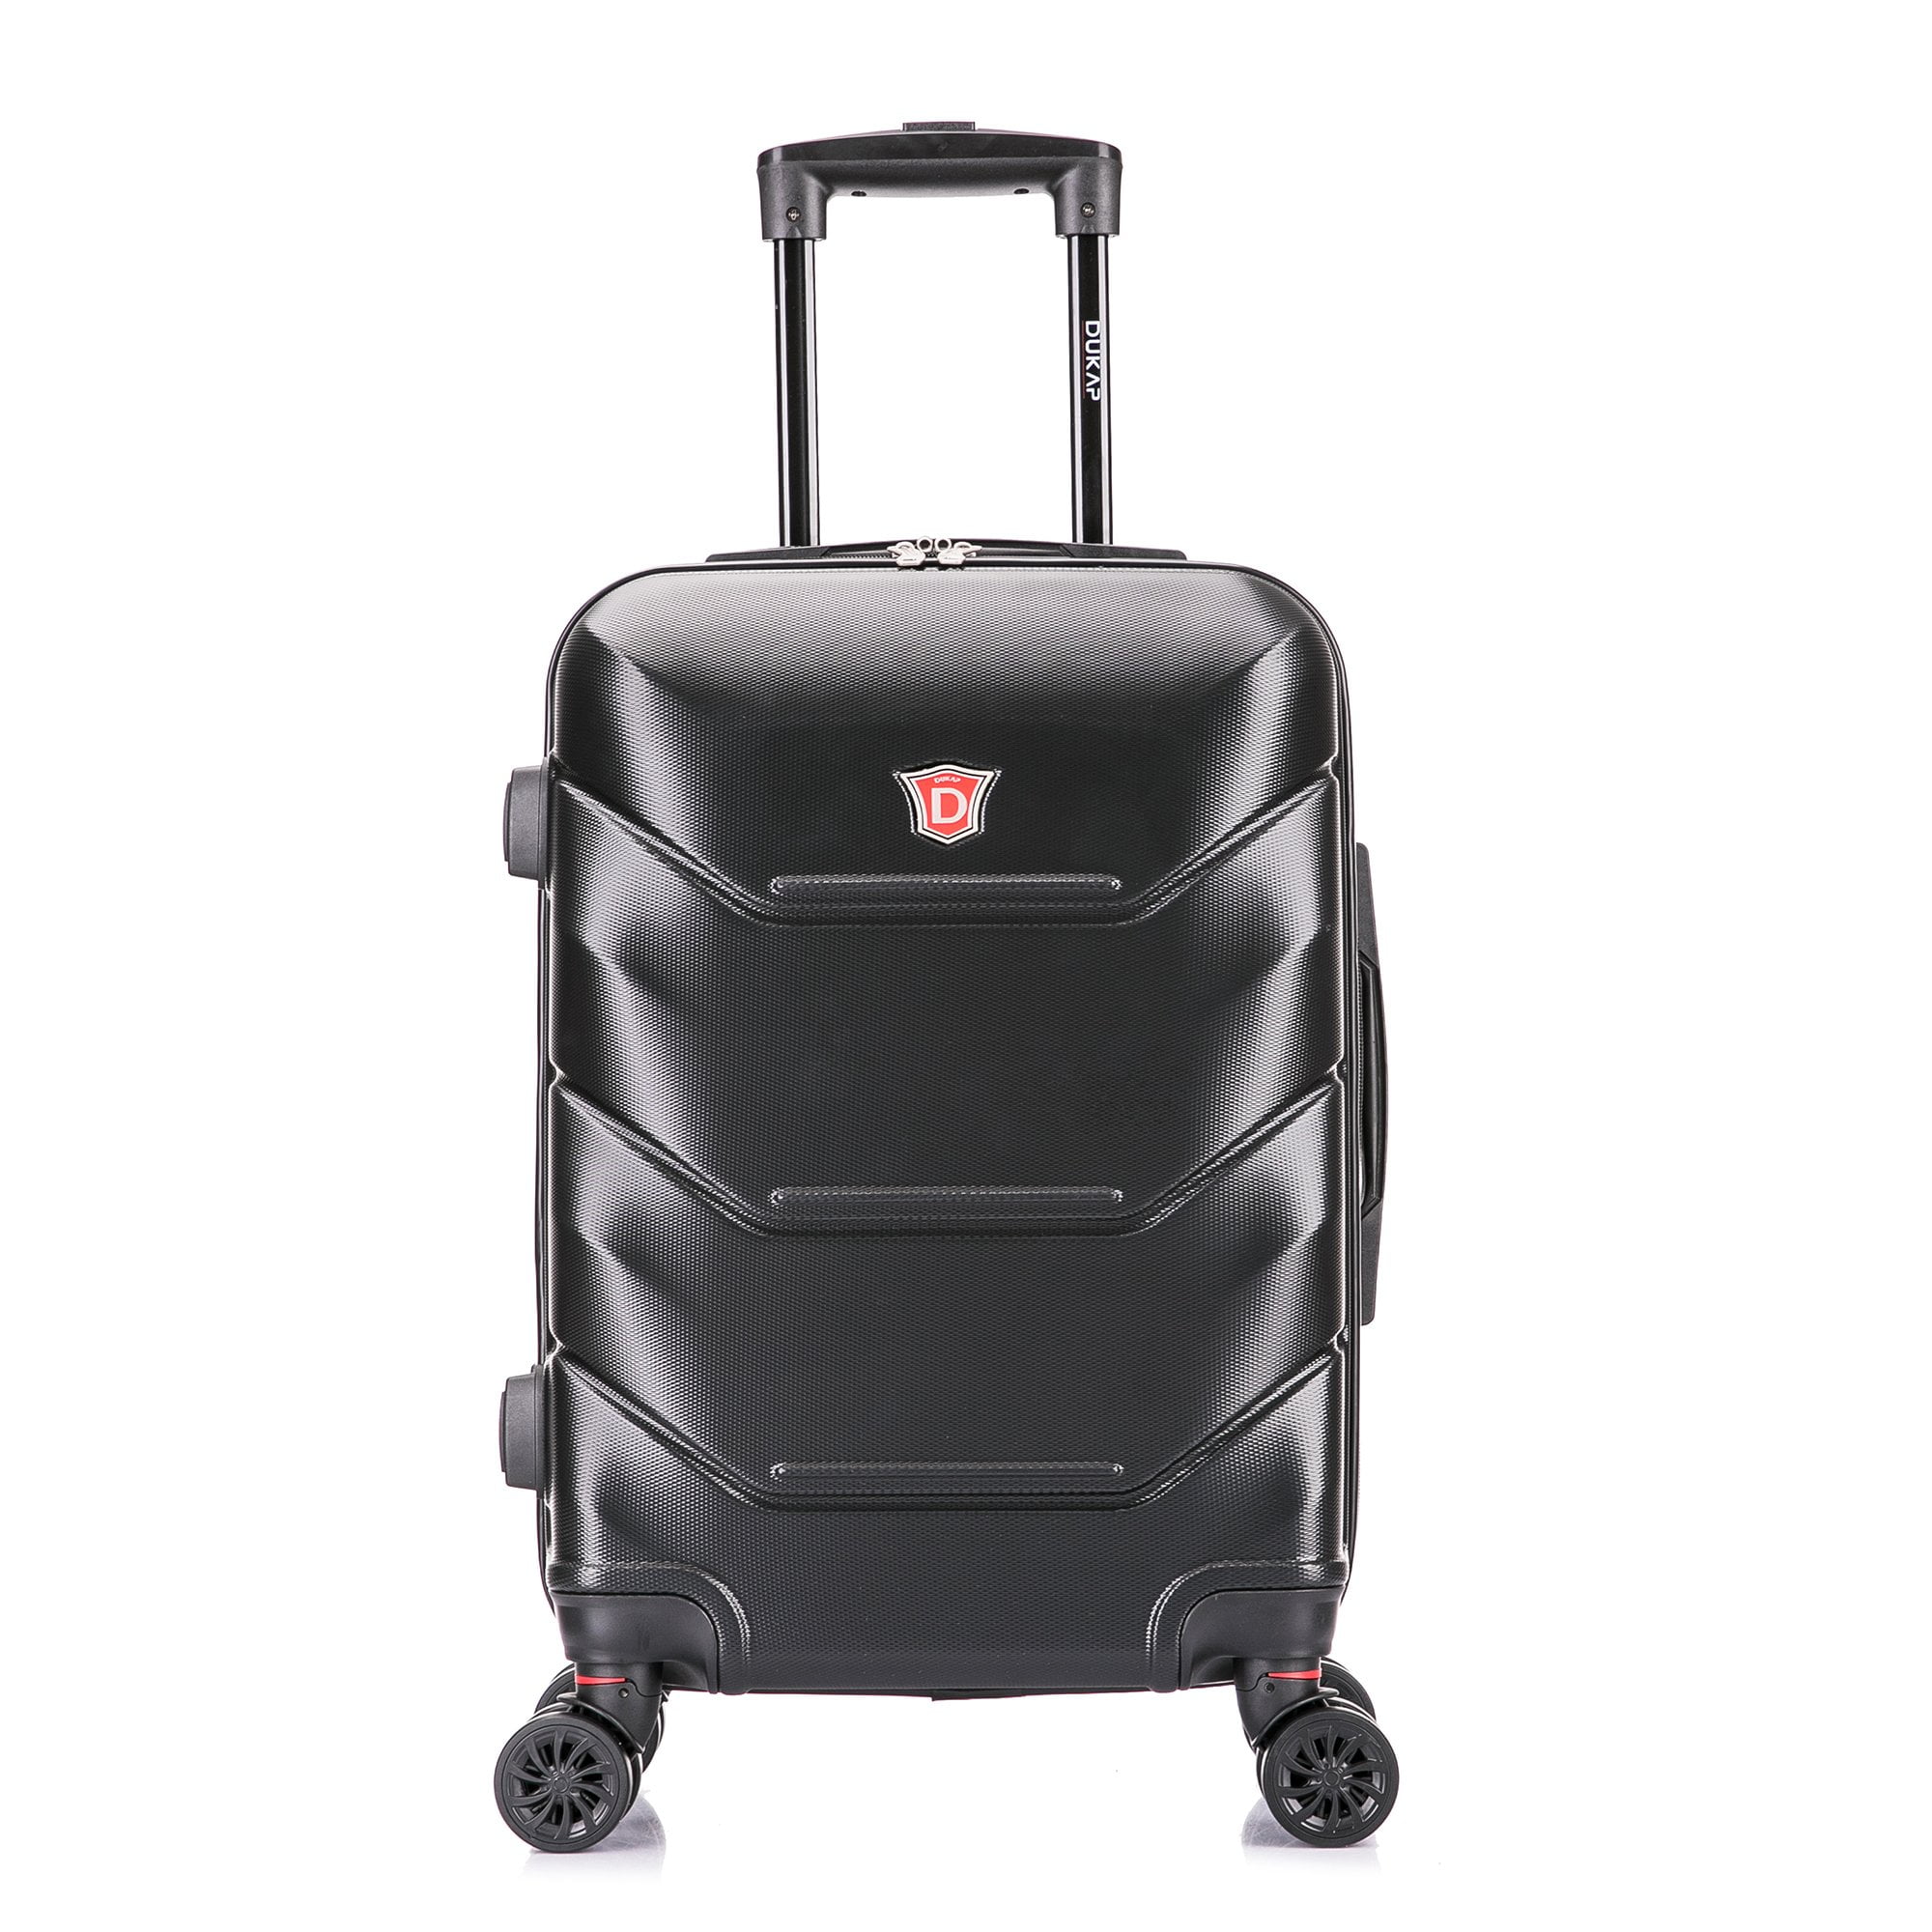 DUKAP TOUR Hardside Luggage Set with Spinner Wheel | Spacious Traveling Suitcase， Travel Suitcases with TSA Lock and Ergonomic GEL Handle | 並行輸入品